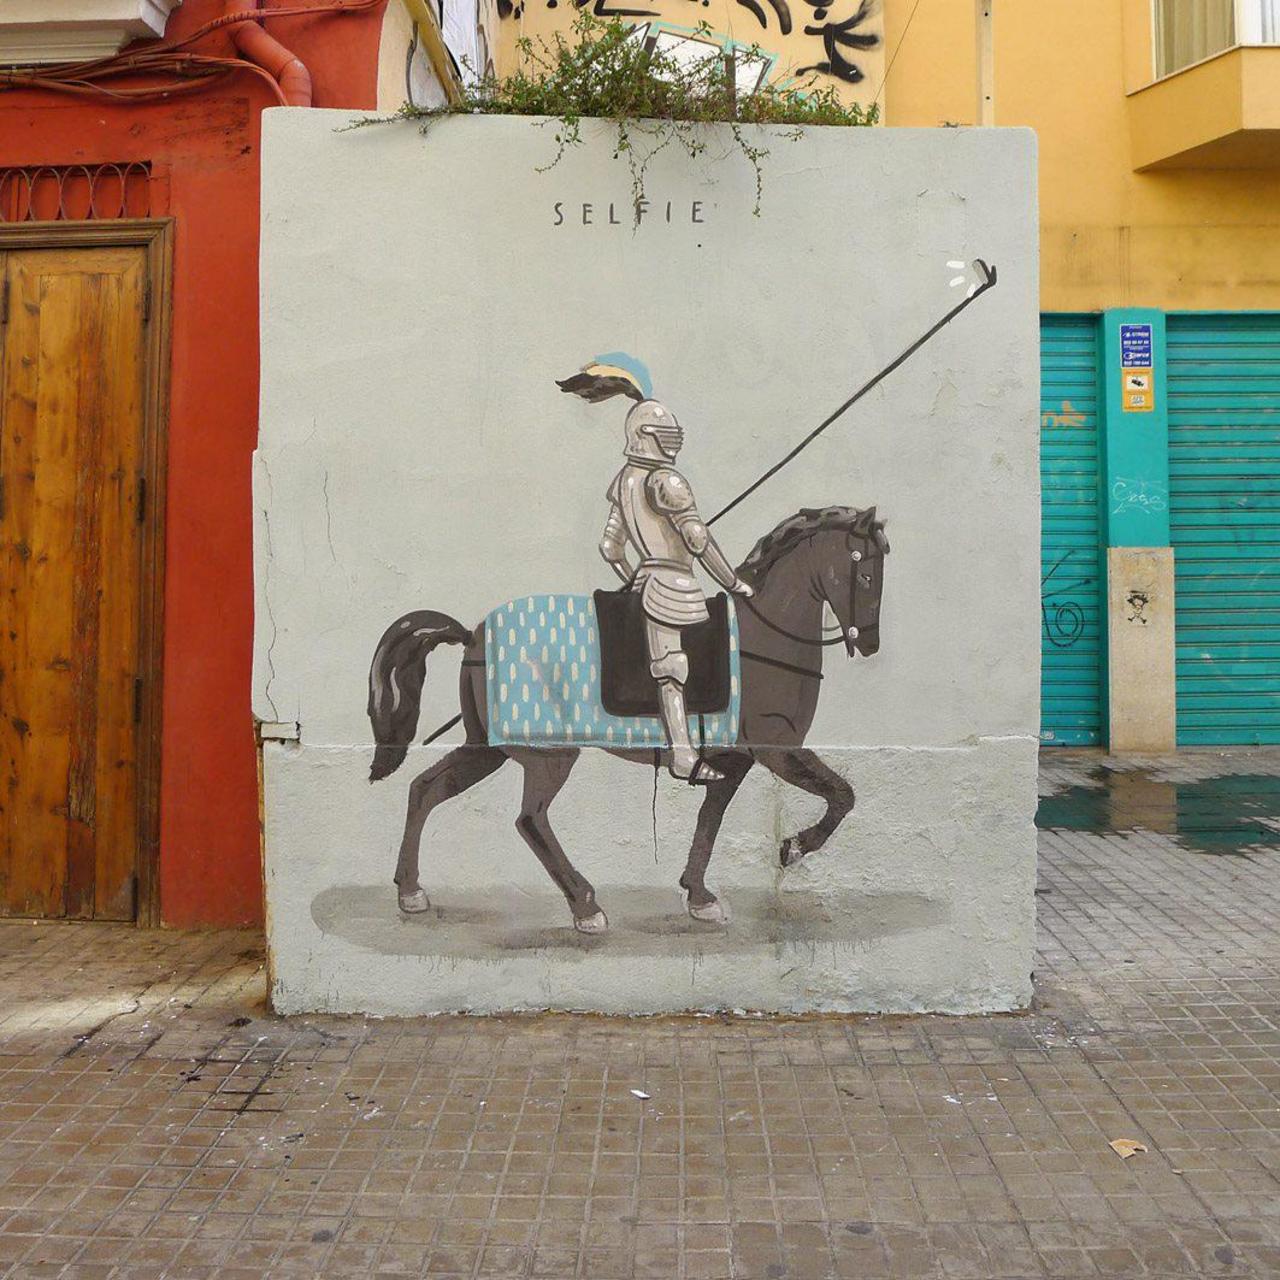 This is what @escif_ 's selfie looks like in Valencia, #Spain #mural #urbanart #streetart #graffiti http://t.co/BabekMzr4O